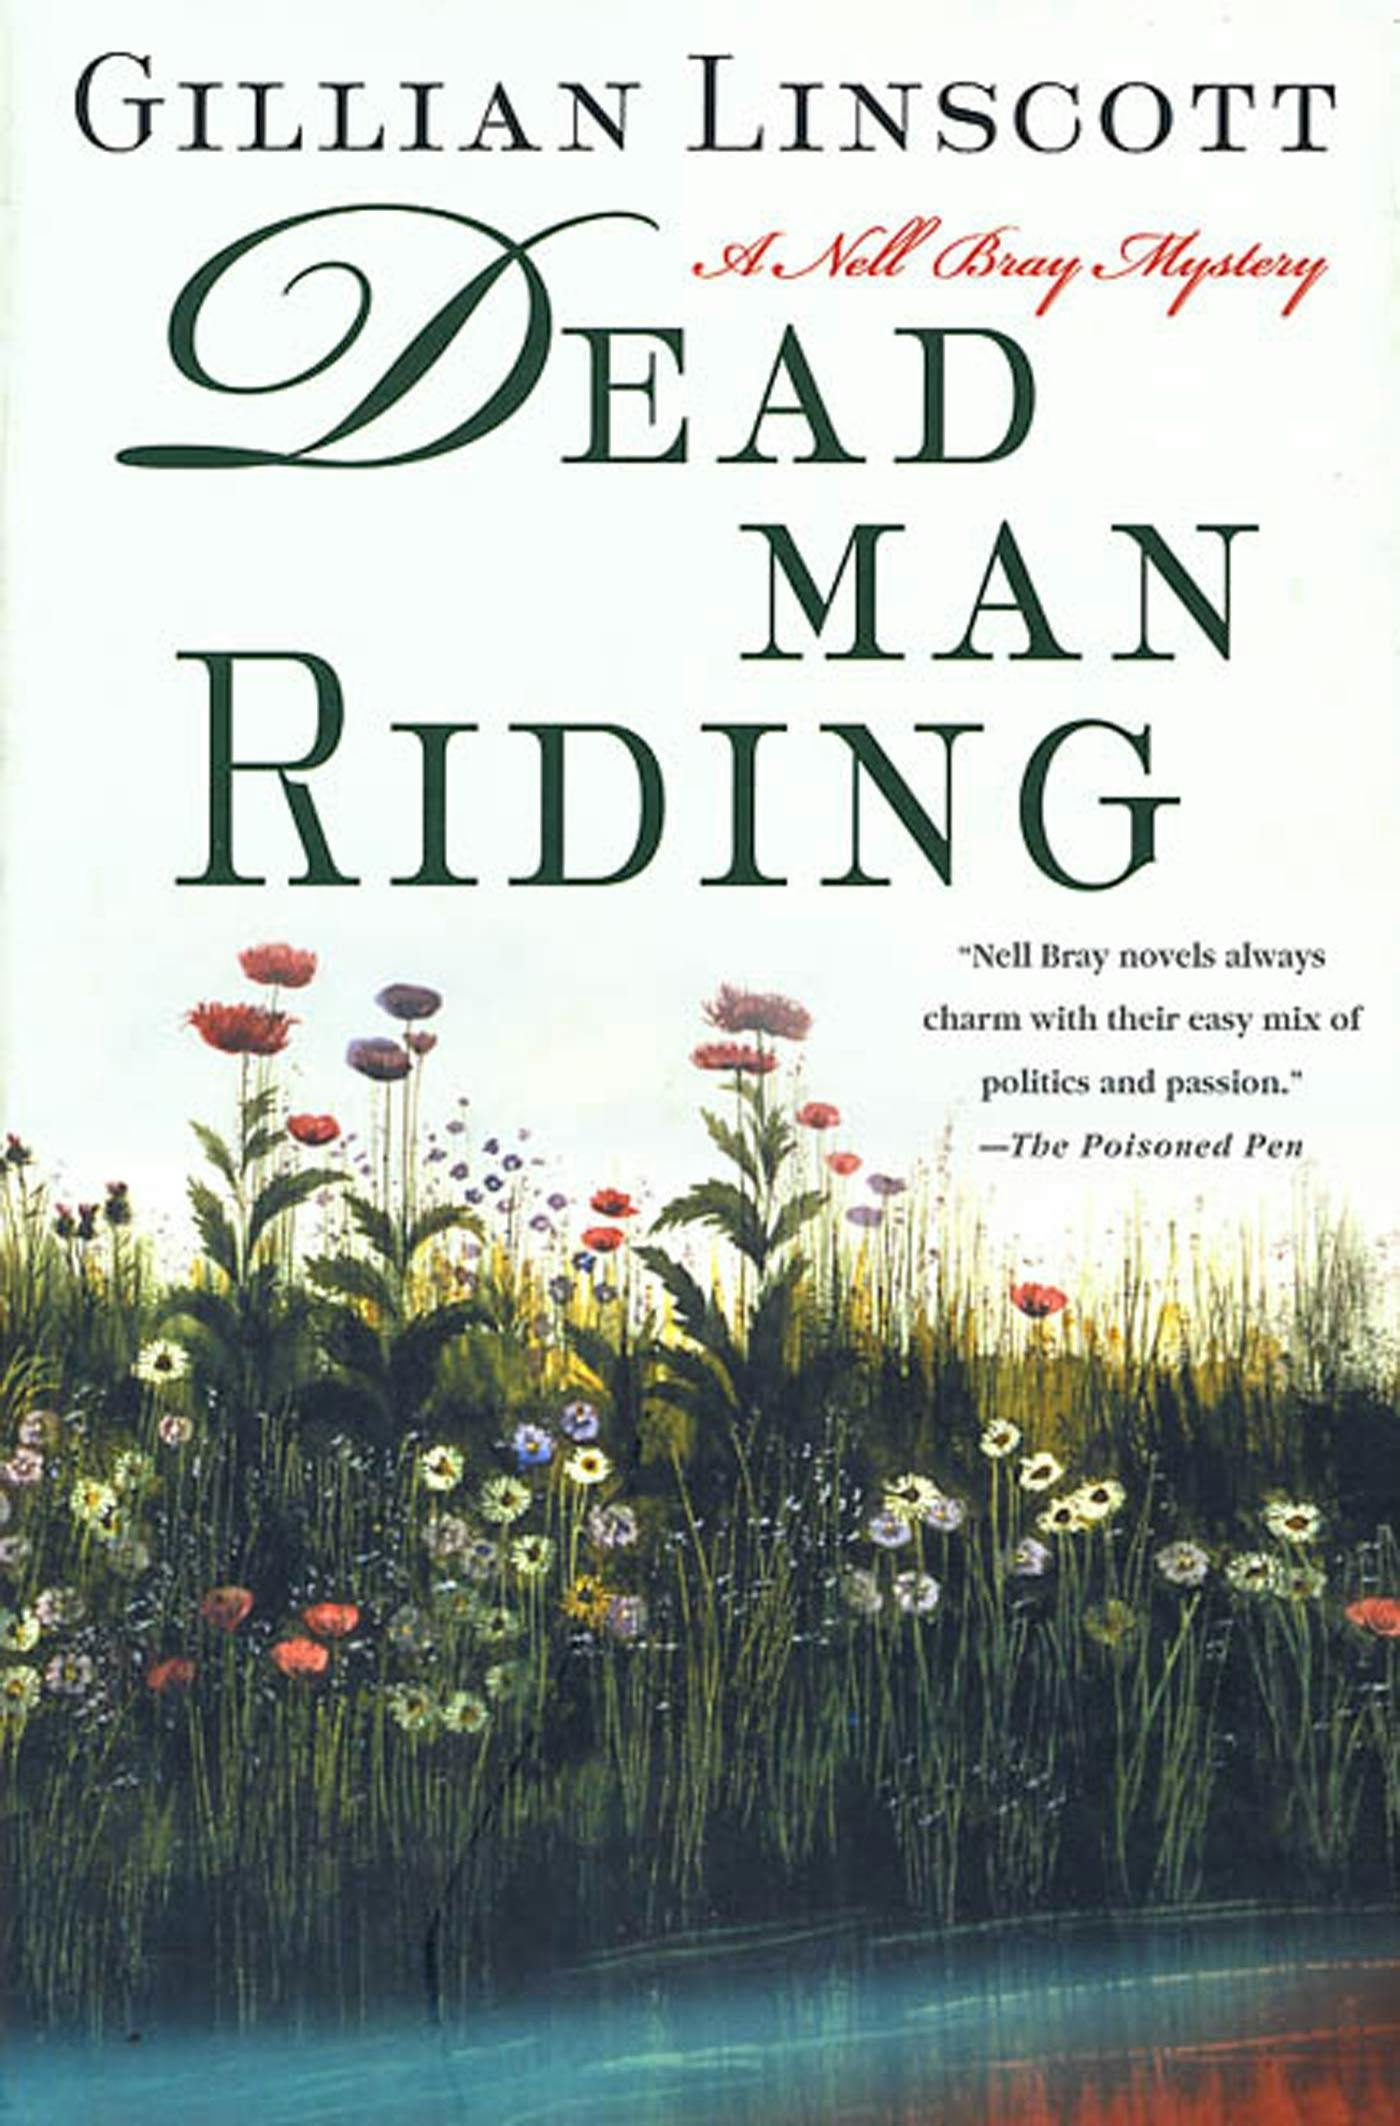 Dead Man Riding